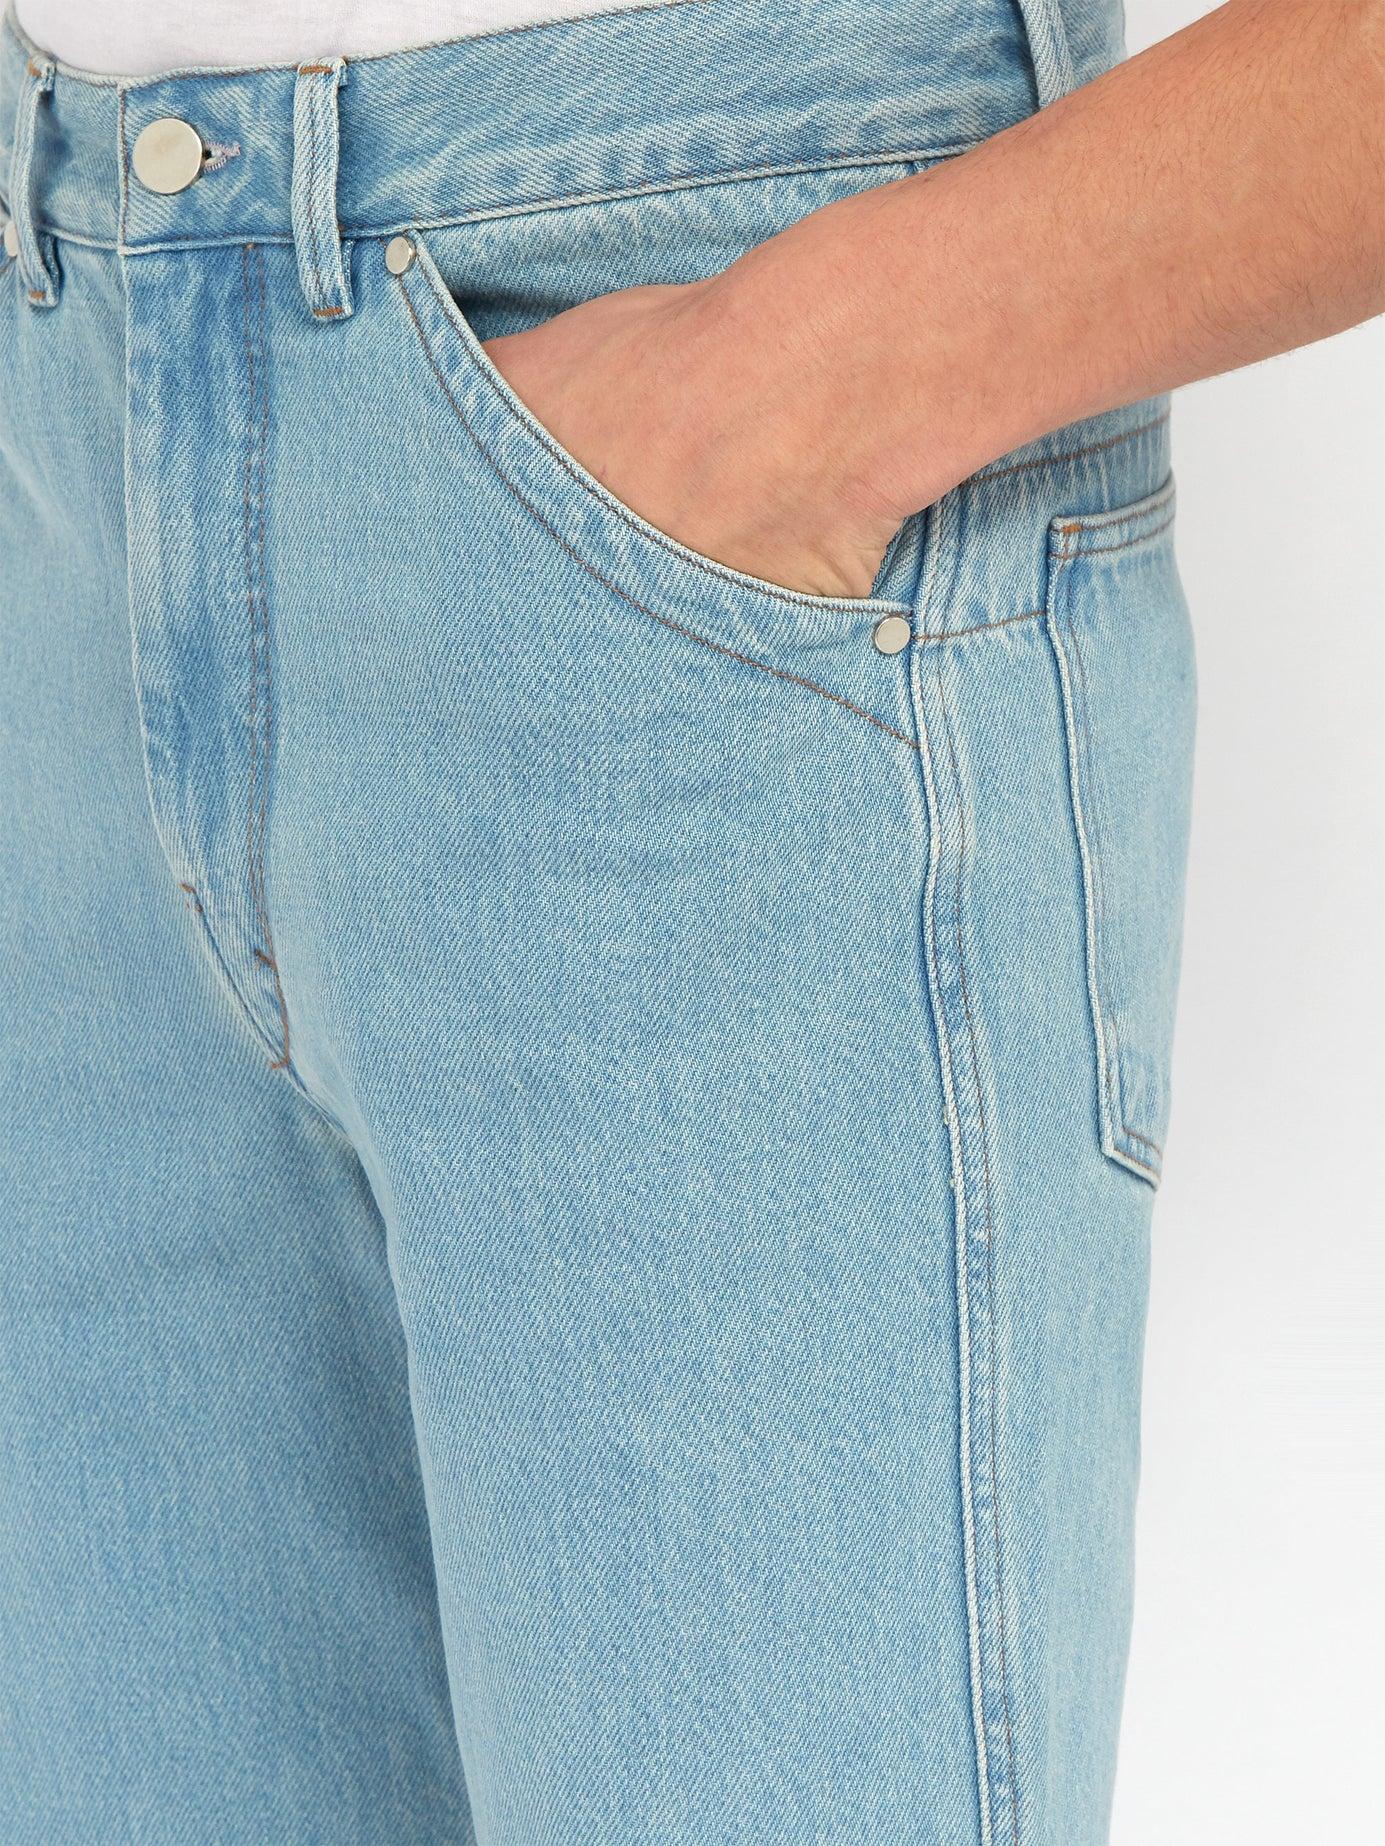 Lemaire Denim Mid-rise Straight-leg Jeans in Blue for Men - Lyst